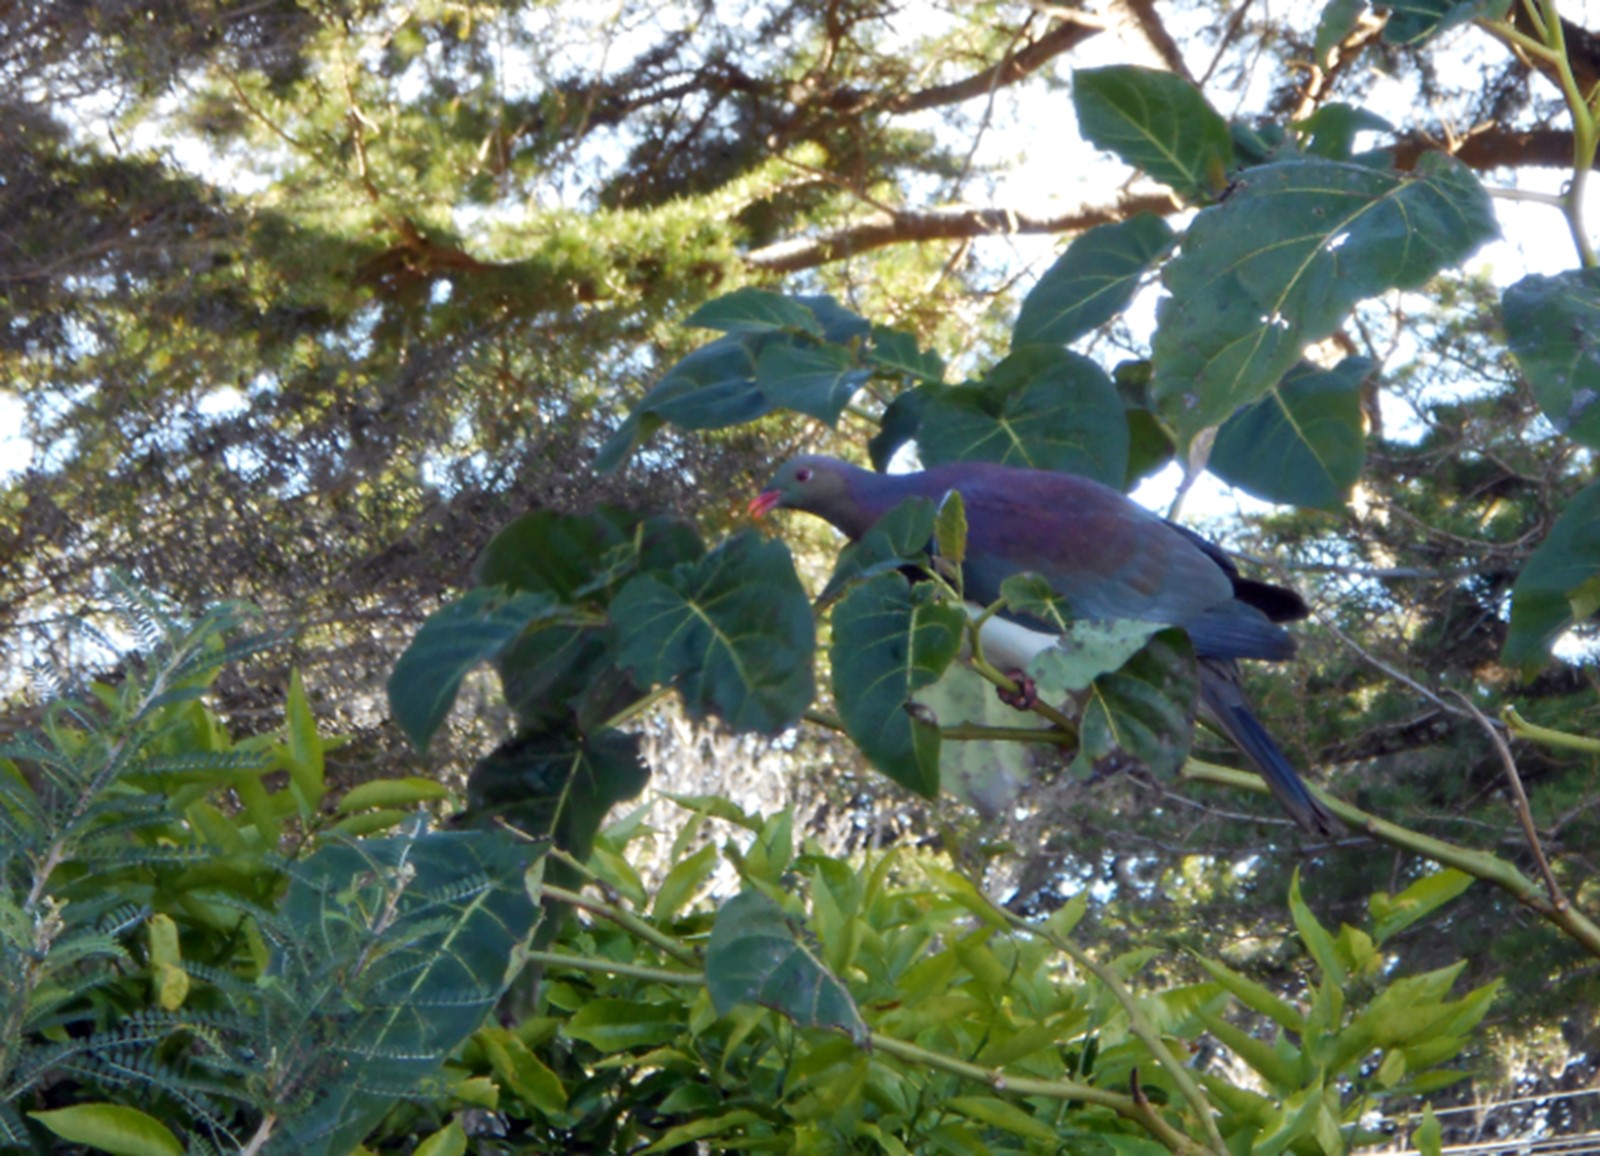 Kereru in a tamarillo tree